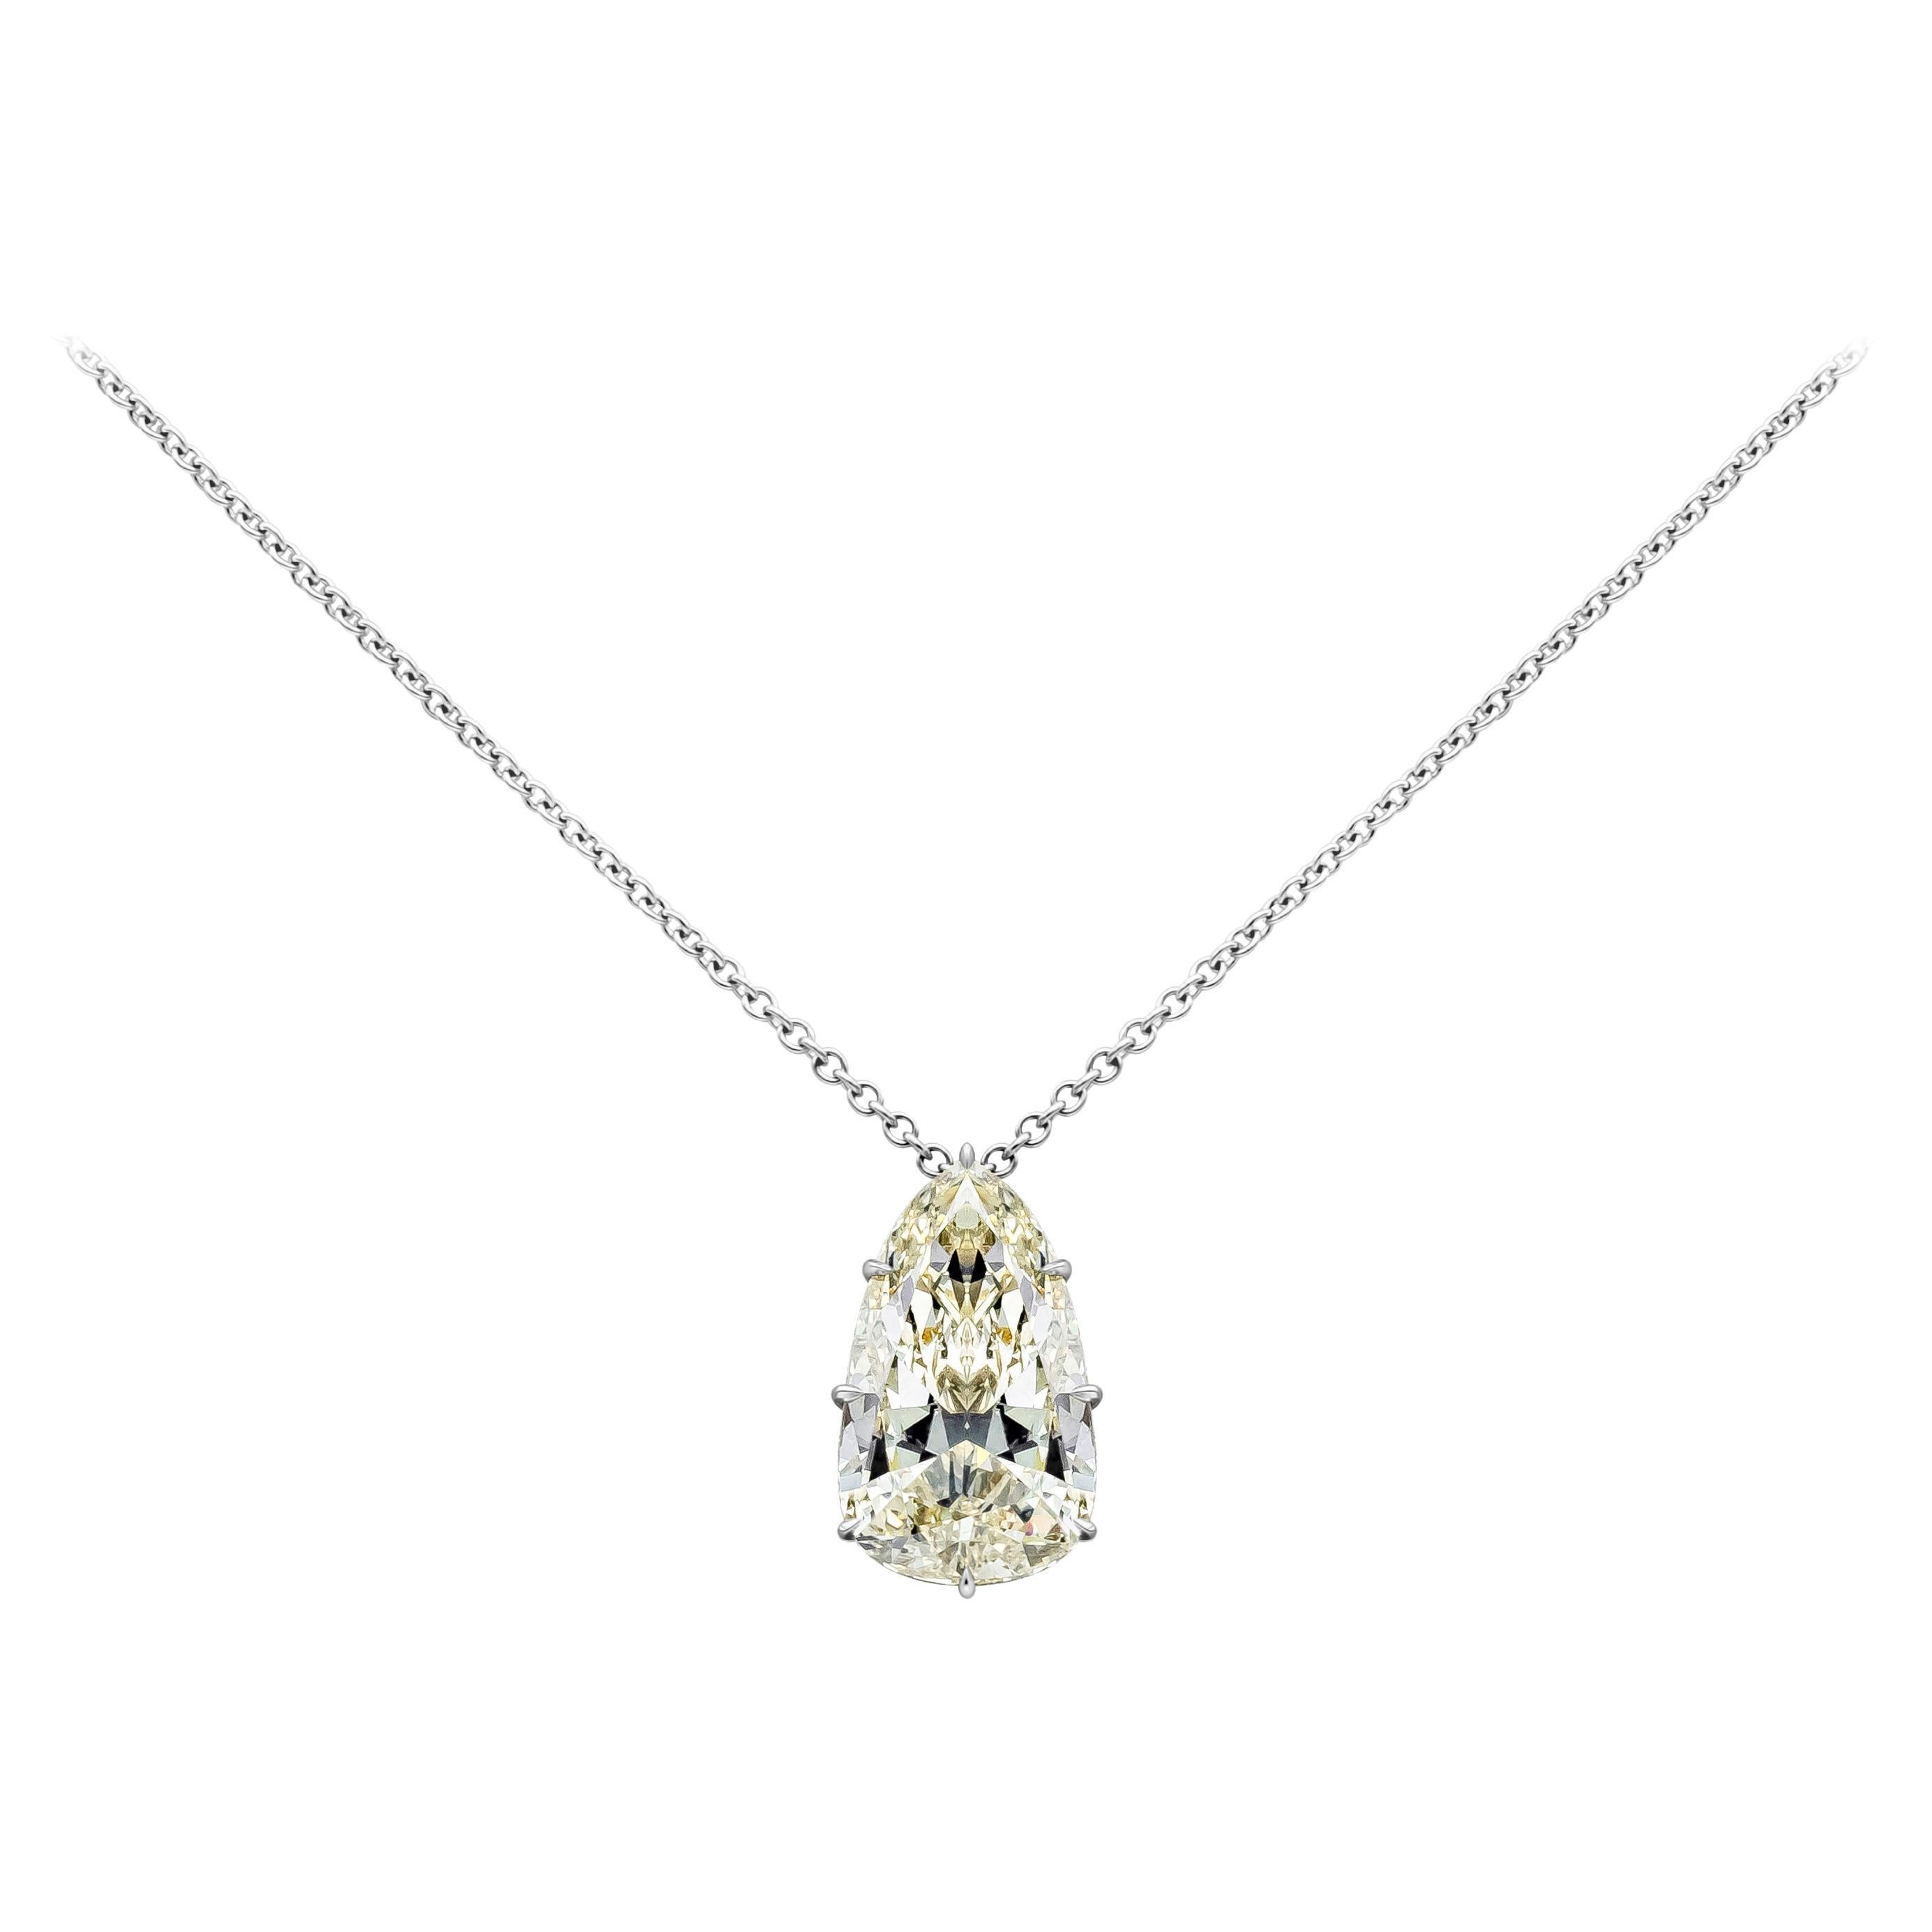 Roman Malakov 9.10 Carat Pear Shape Diamond Solitaire Pendant Necklace